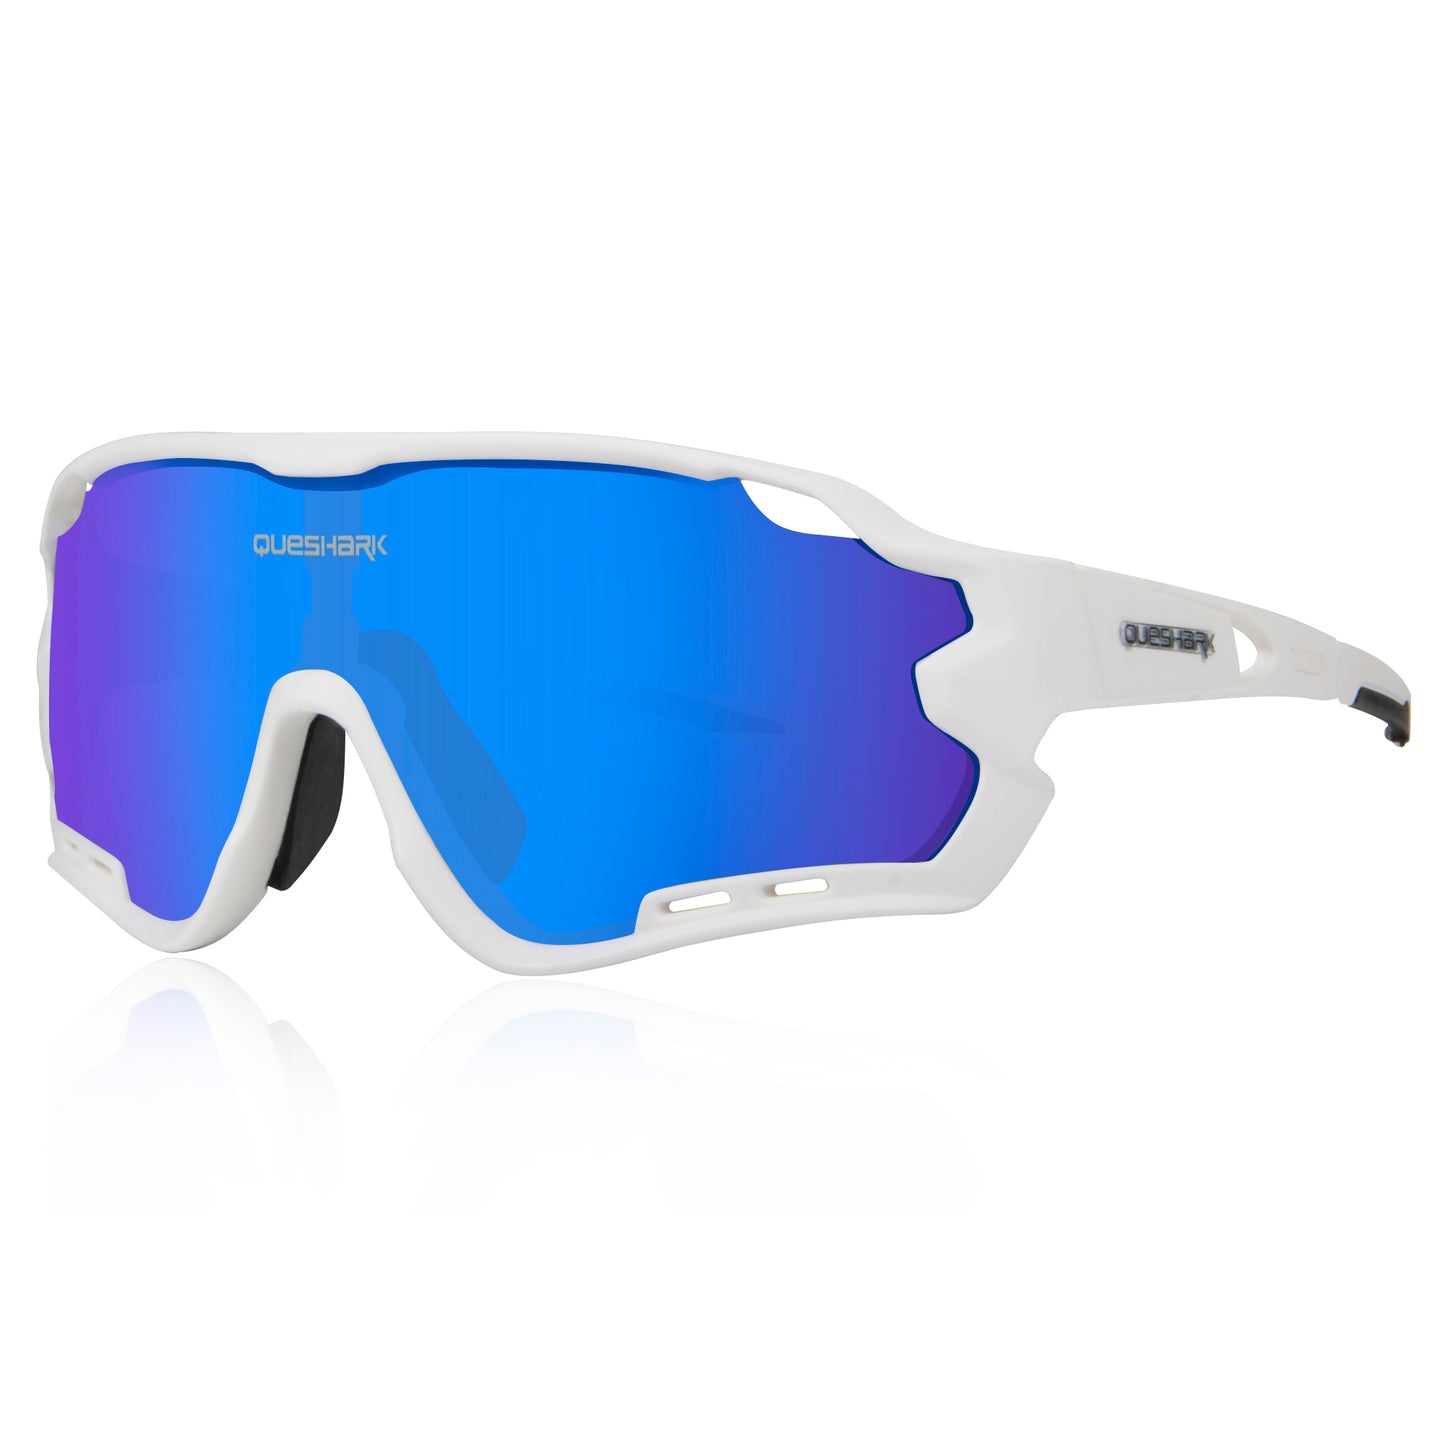 <transcy>QE44 Gafas de sol de ciclismo polarizadas blancas UV400 Gafas de bicicleta Gafas deportivas para hombres Mujeres 4 lentes</transcy>